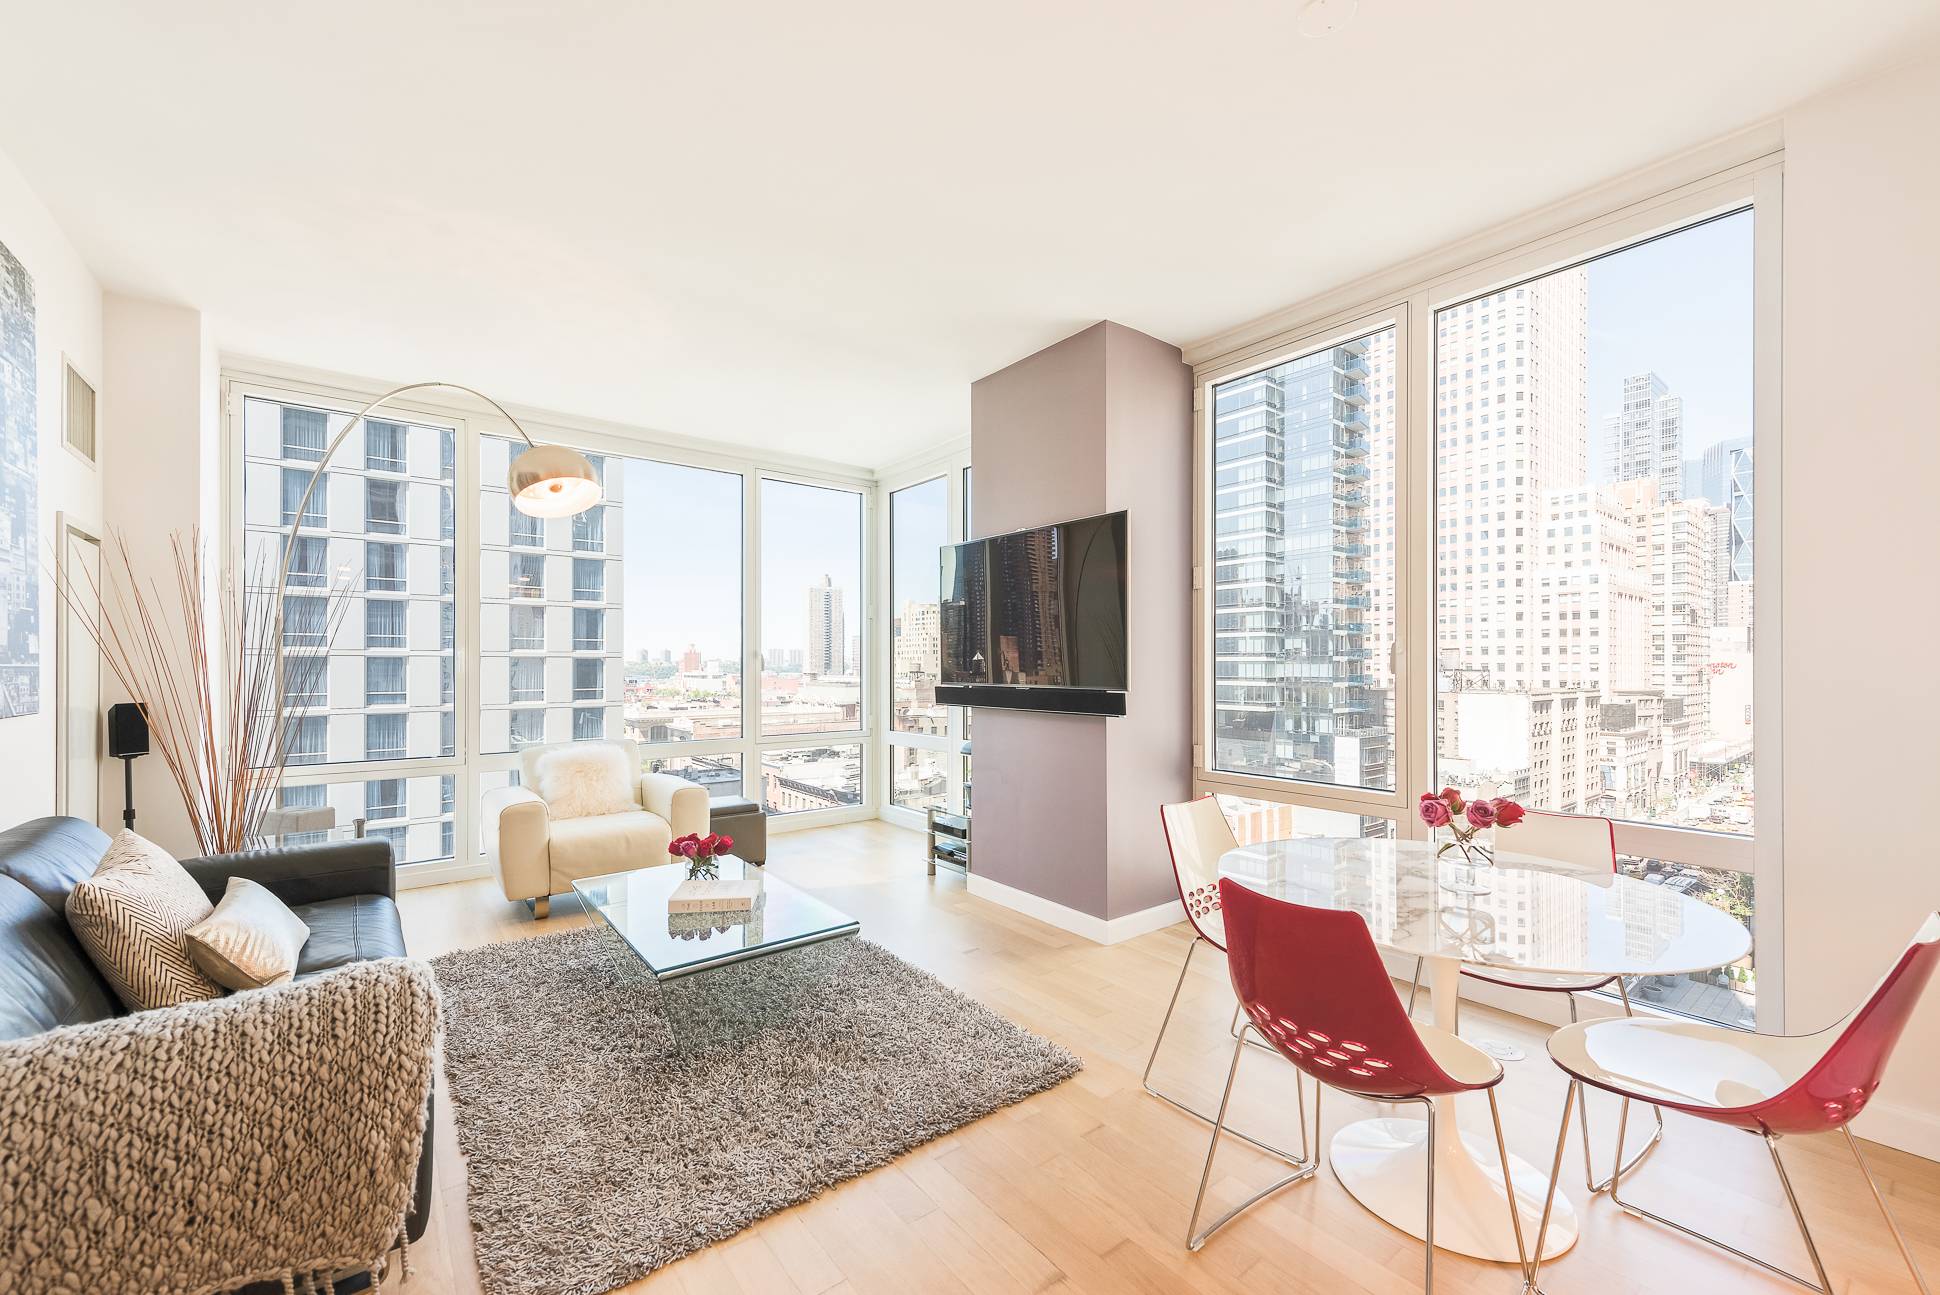 STARCHITECT COSTAS KONDYLIS DESIGNED PLATINUM Condominium at 247 WEST 46th STREET PERFECT NW CORNER ONE BEDROOM coveted SALE OFFERING